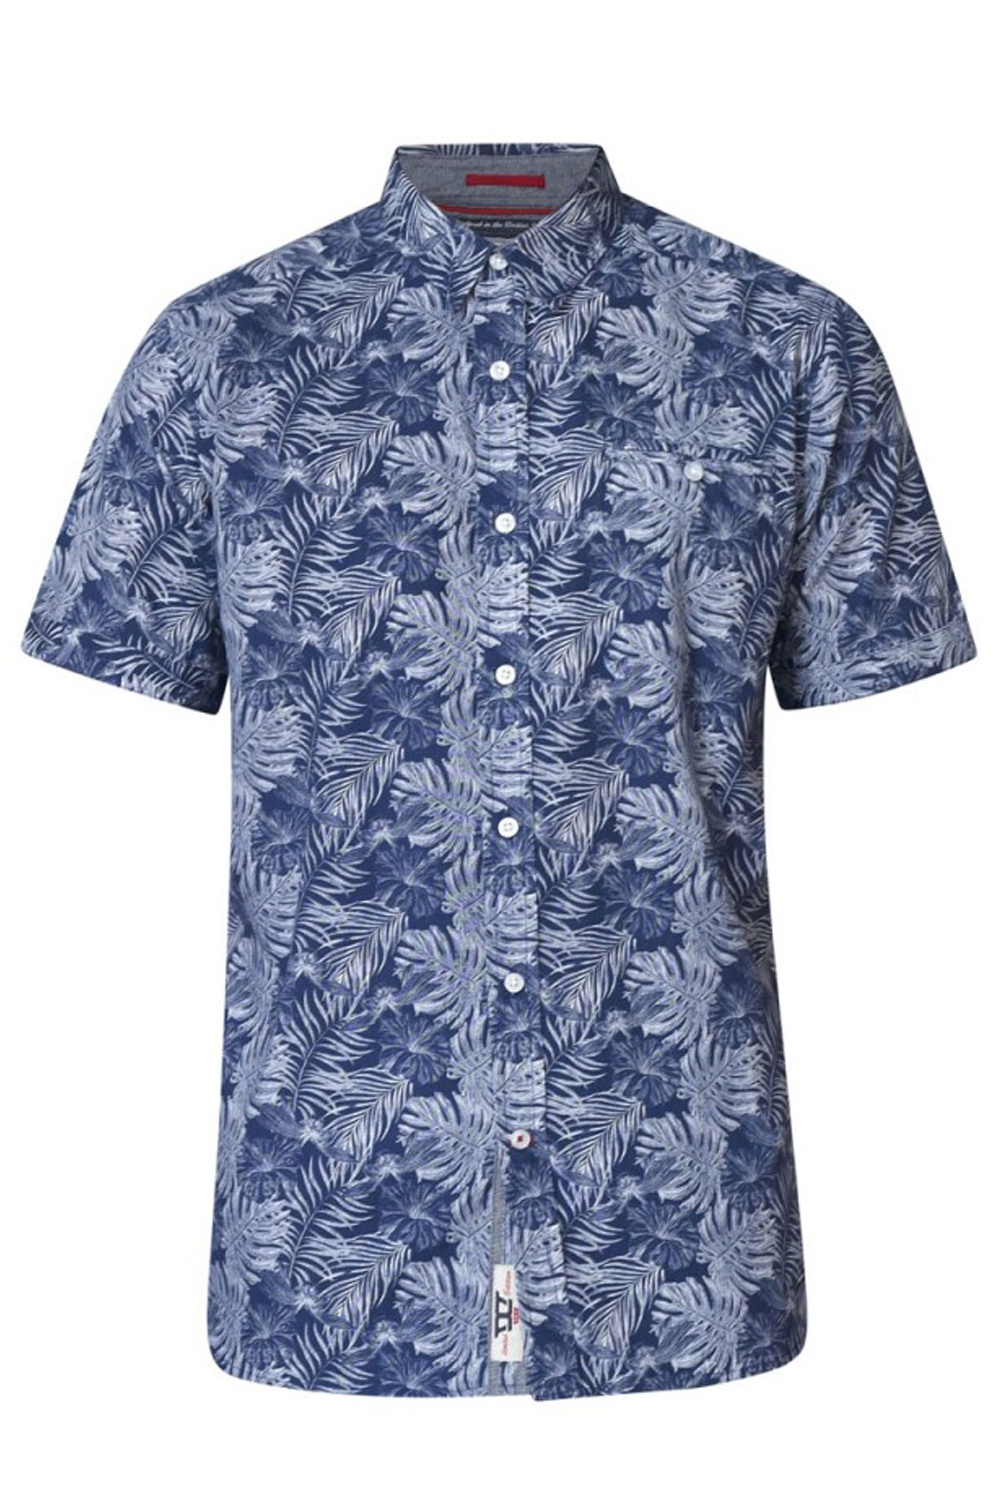 D555 Duke Mens King Size Big Tall Hawaiian Print Short Sleeve Collared Shirts